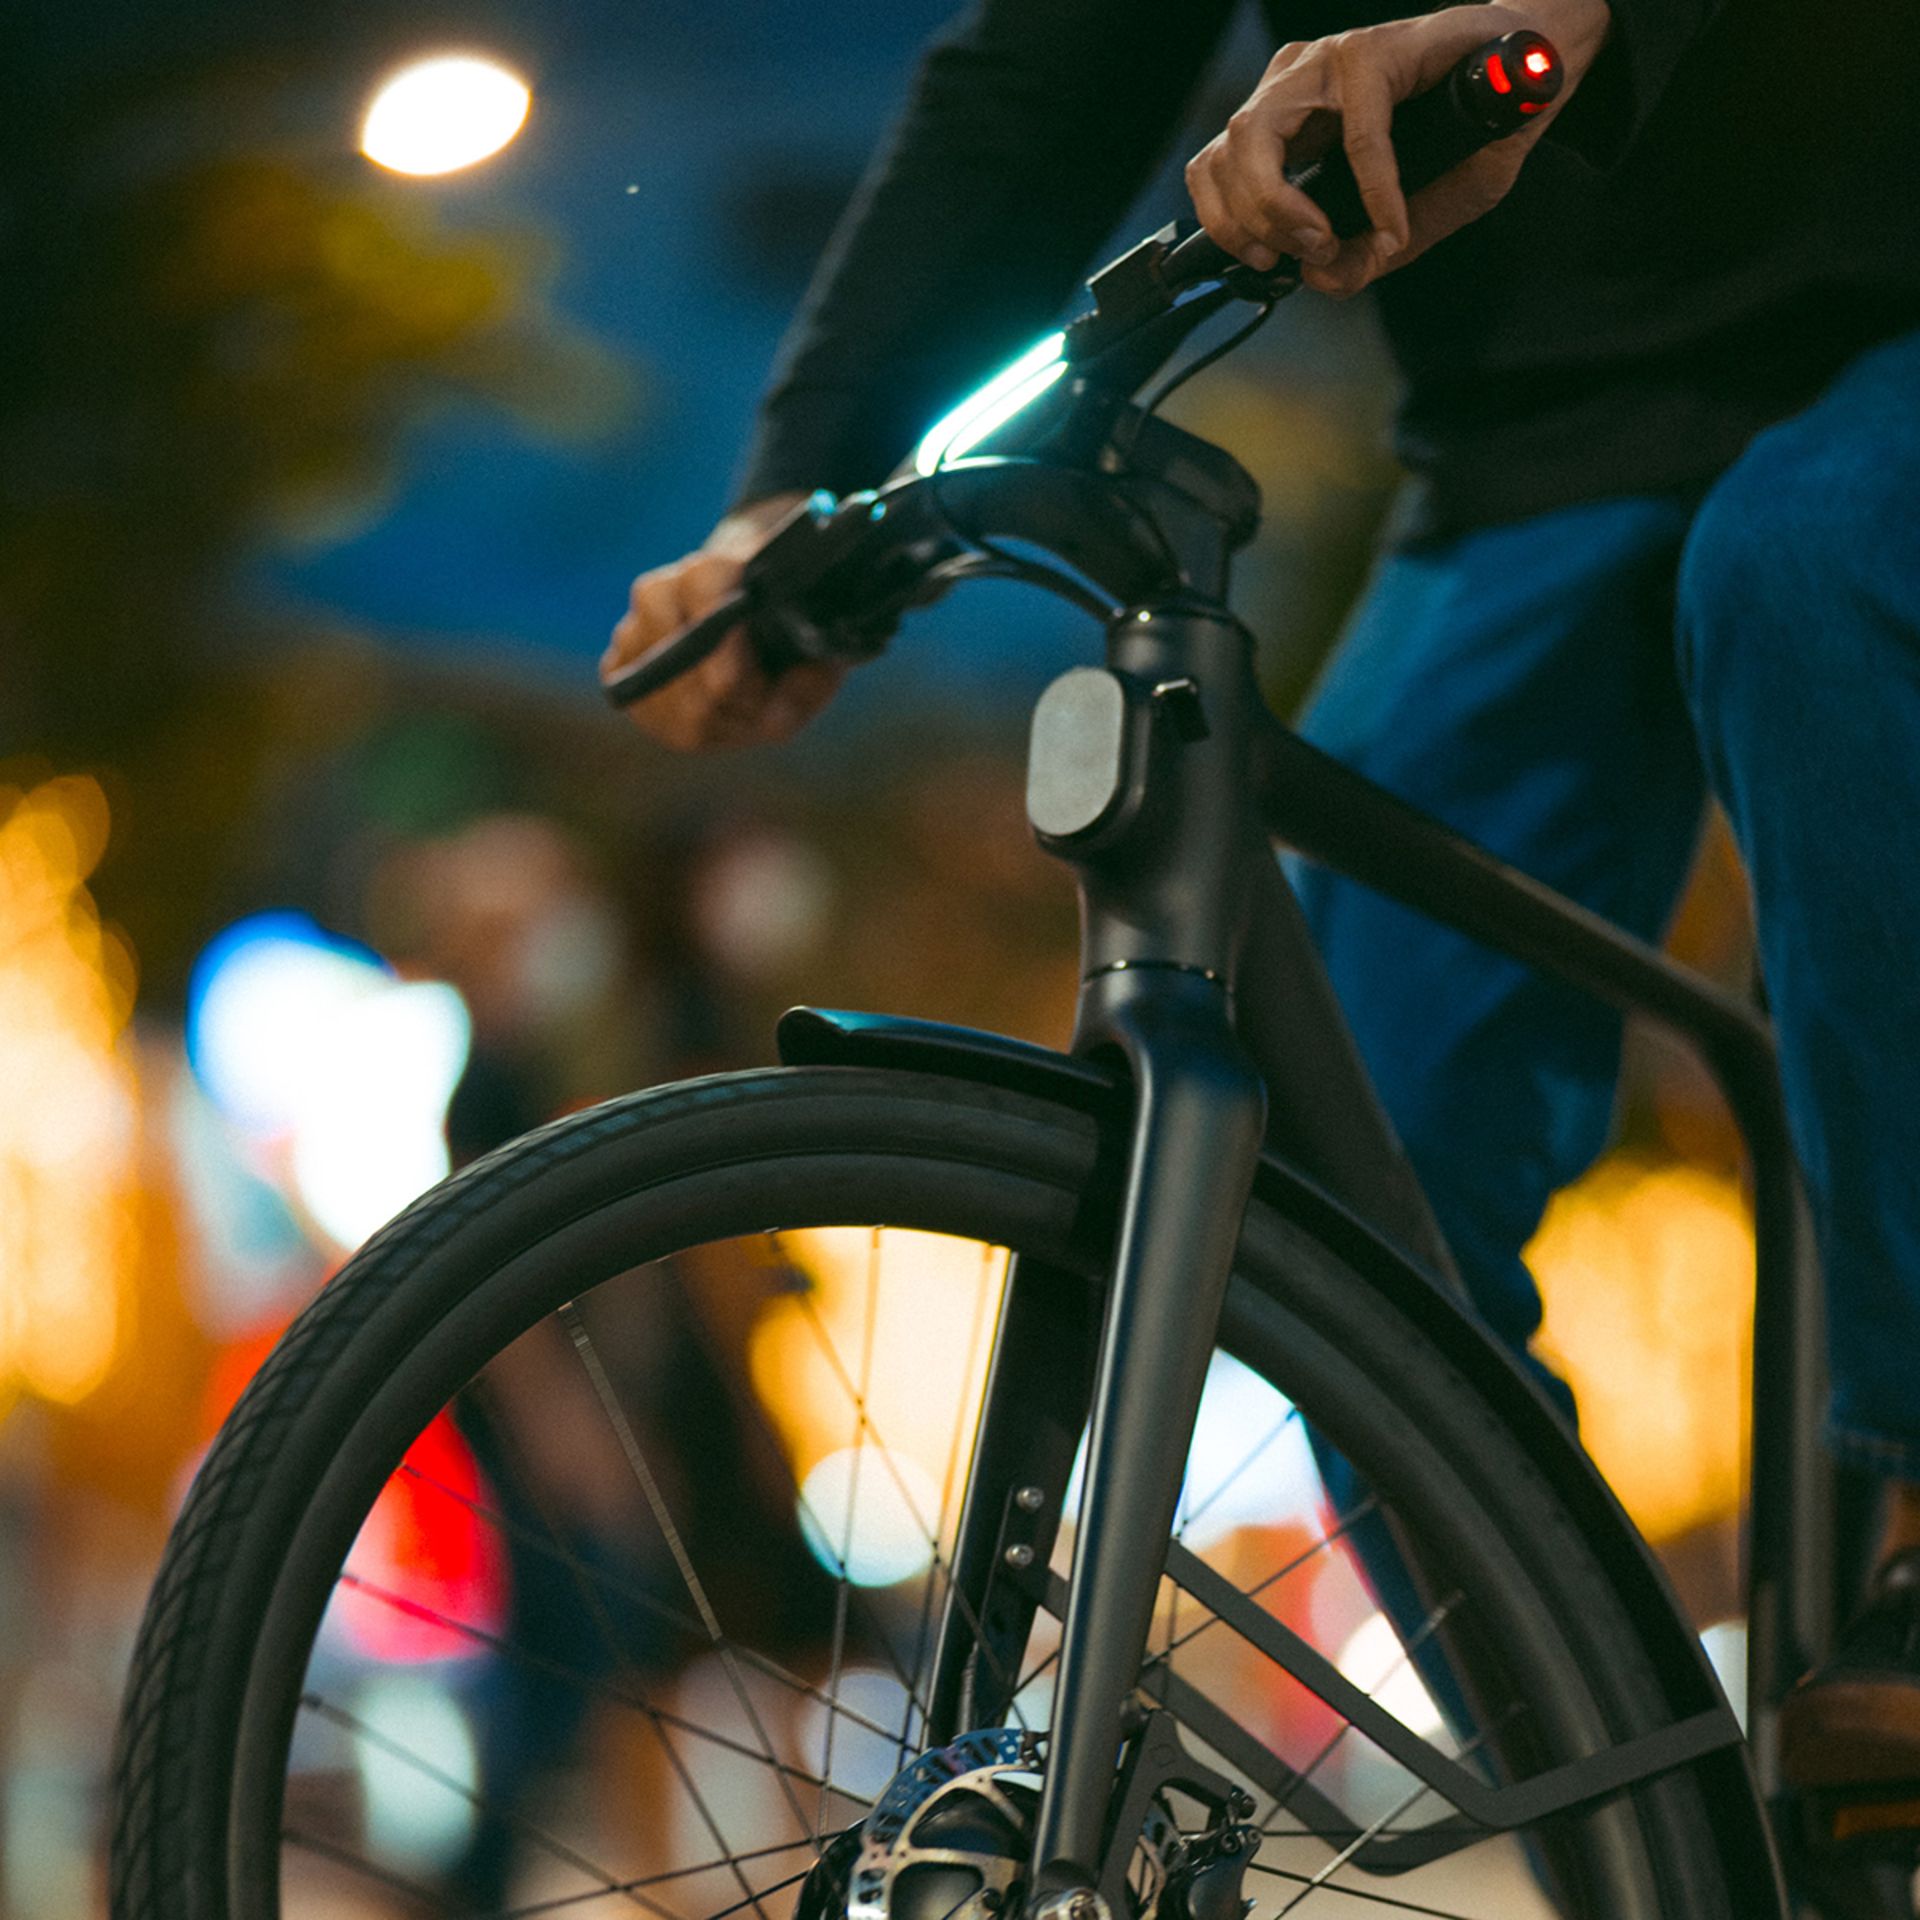 Modmo Saigon+ Electric Bicycle - RRP £2800 - Size M (Rider: 155-175cm) - Image 15 of 19